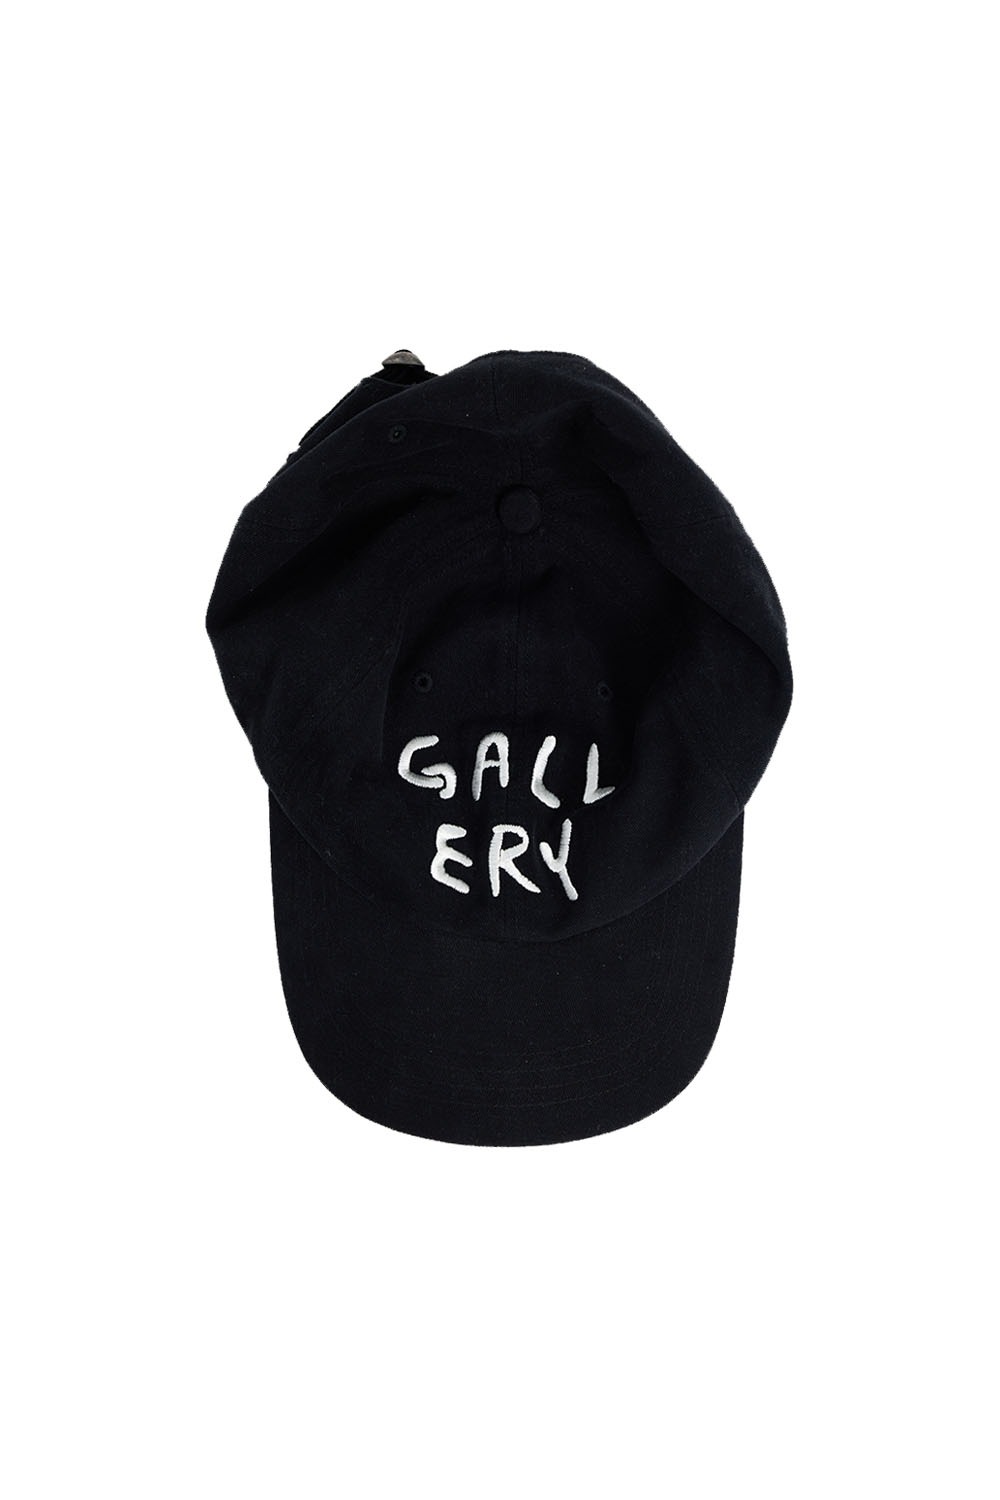 Gallery Logo Ball Cap - Black